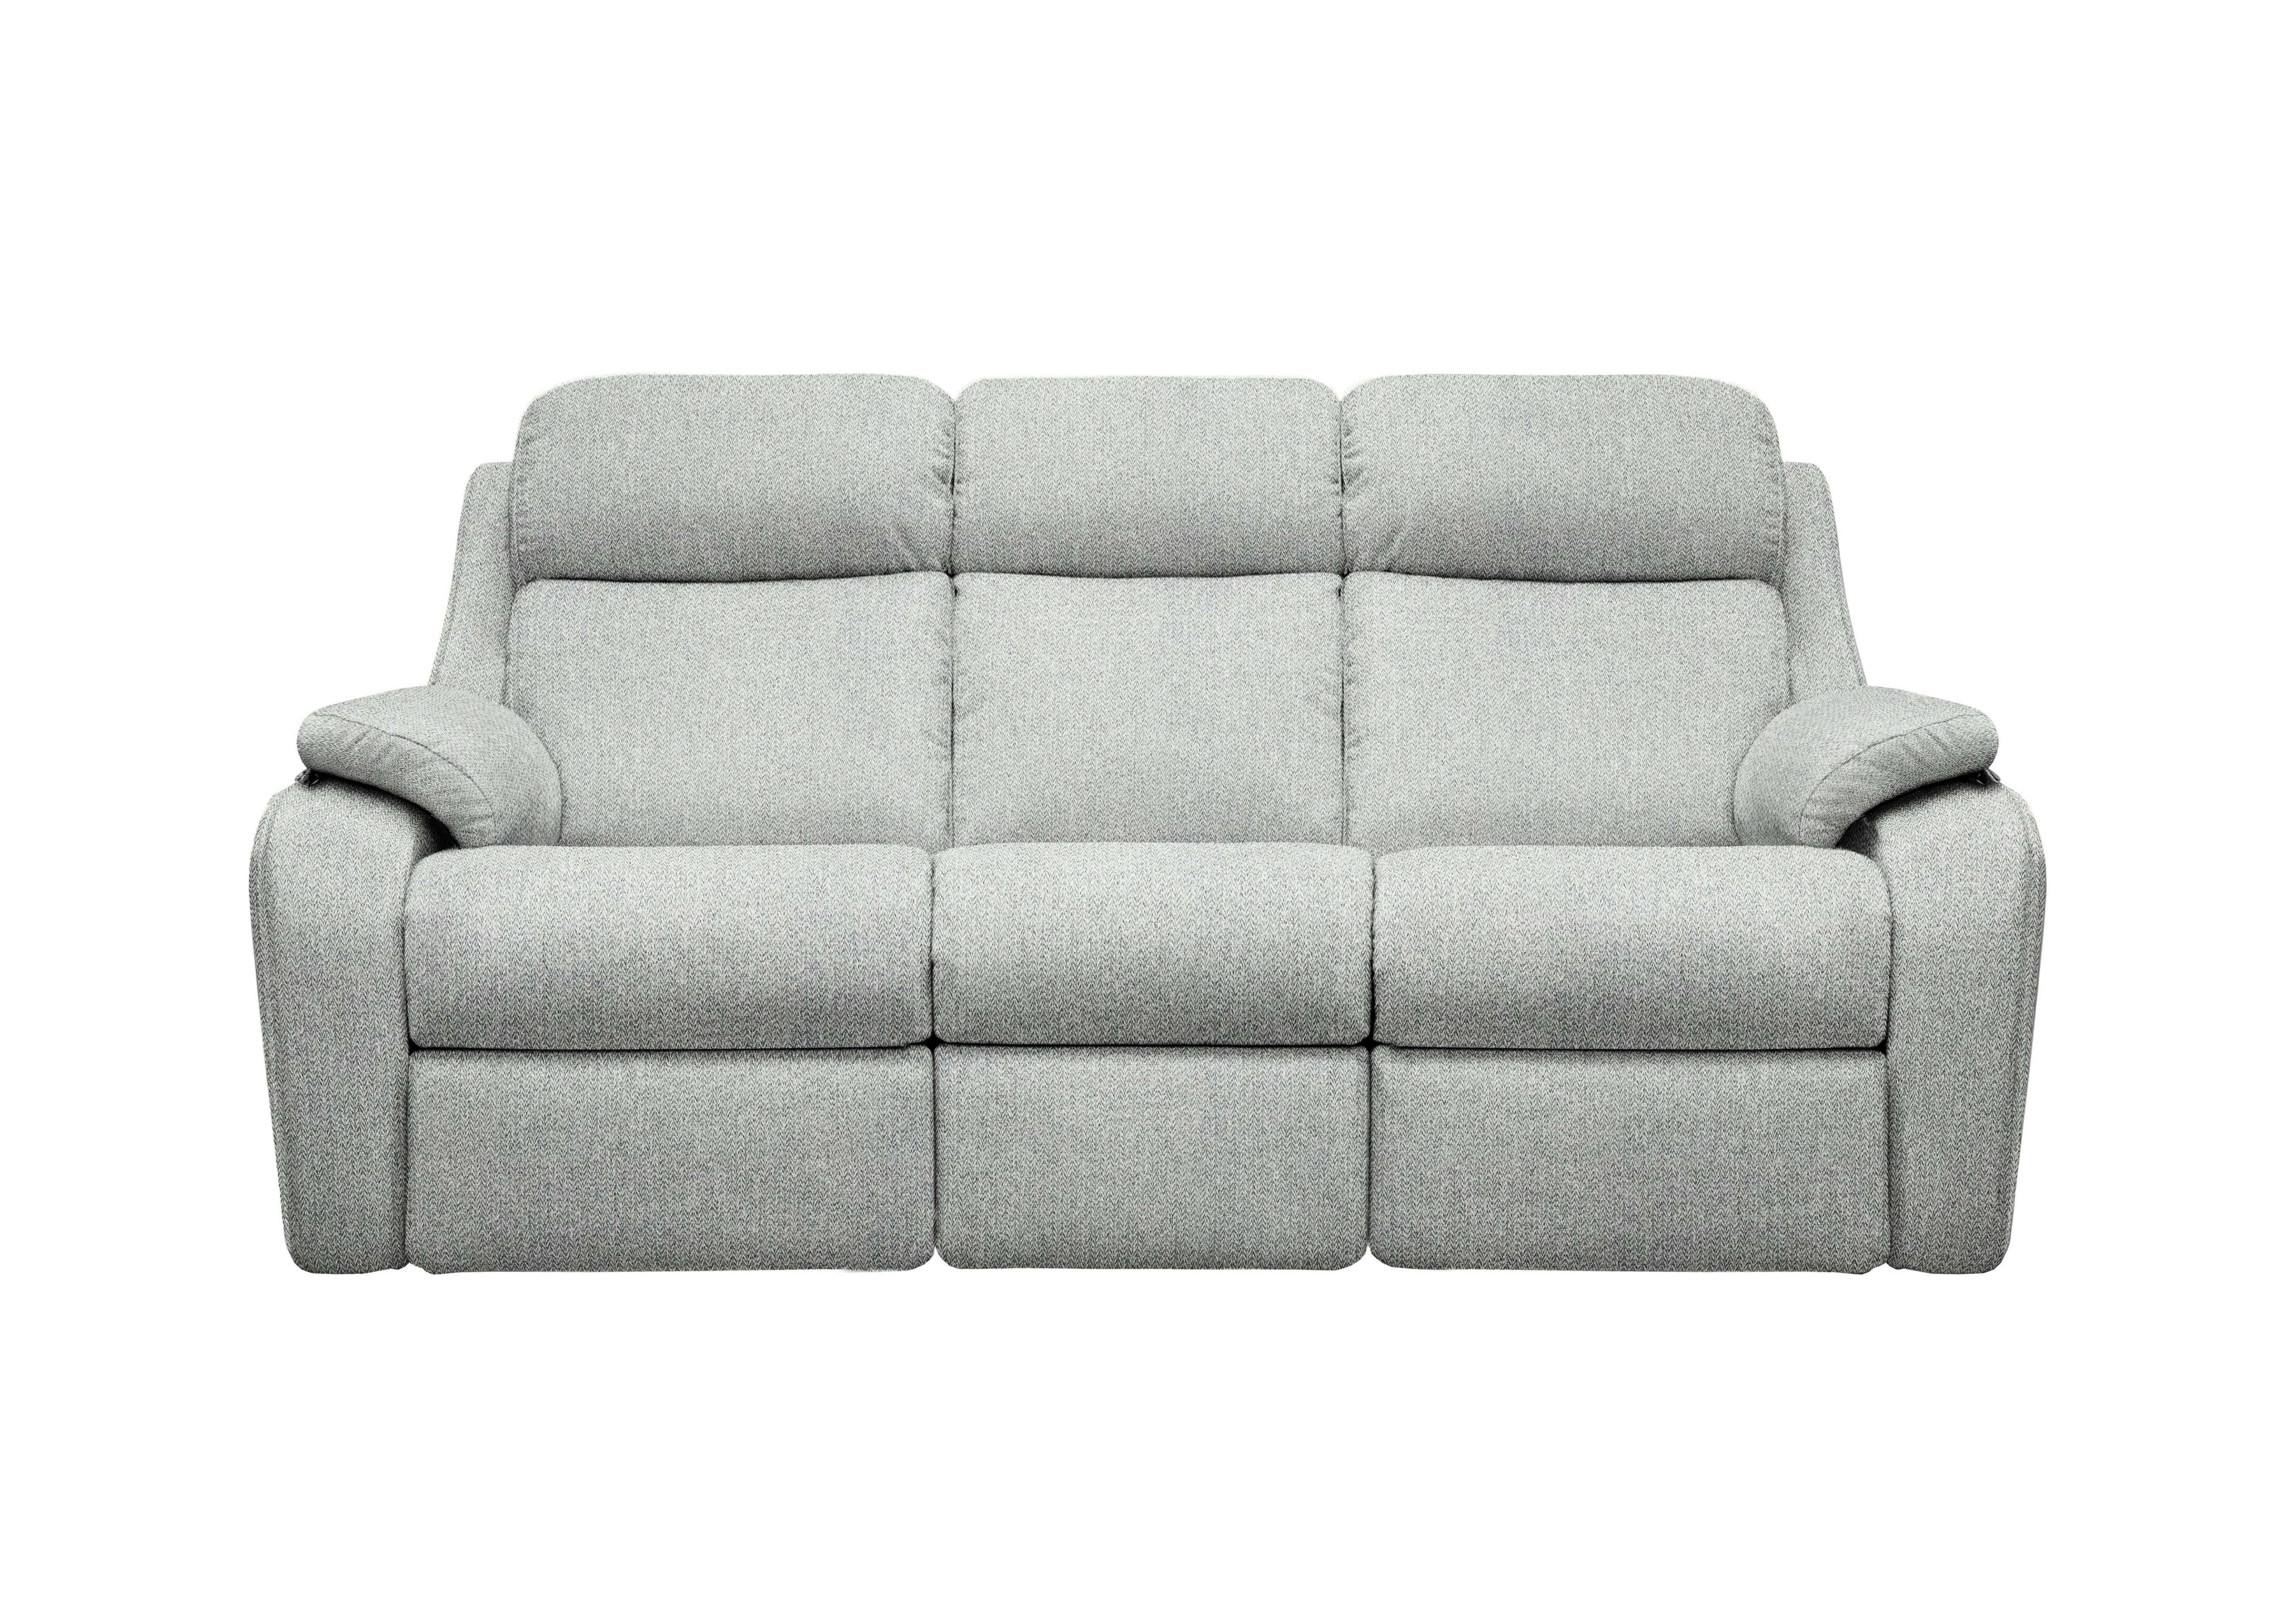 Kingsbury 3 Seater Fabric Sofa in A011 Swift Cygnet on Furniture Village